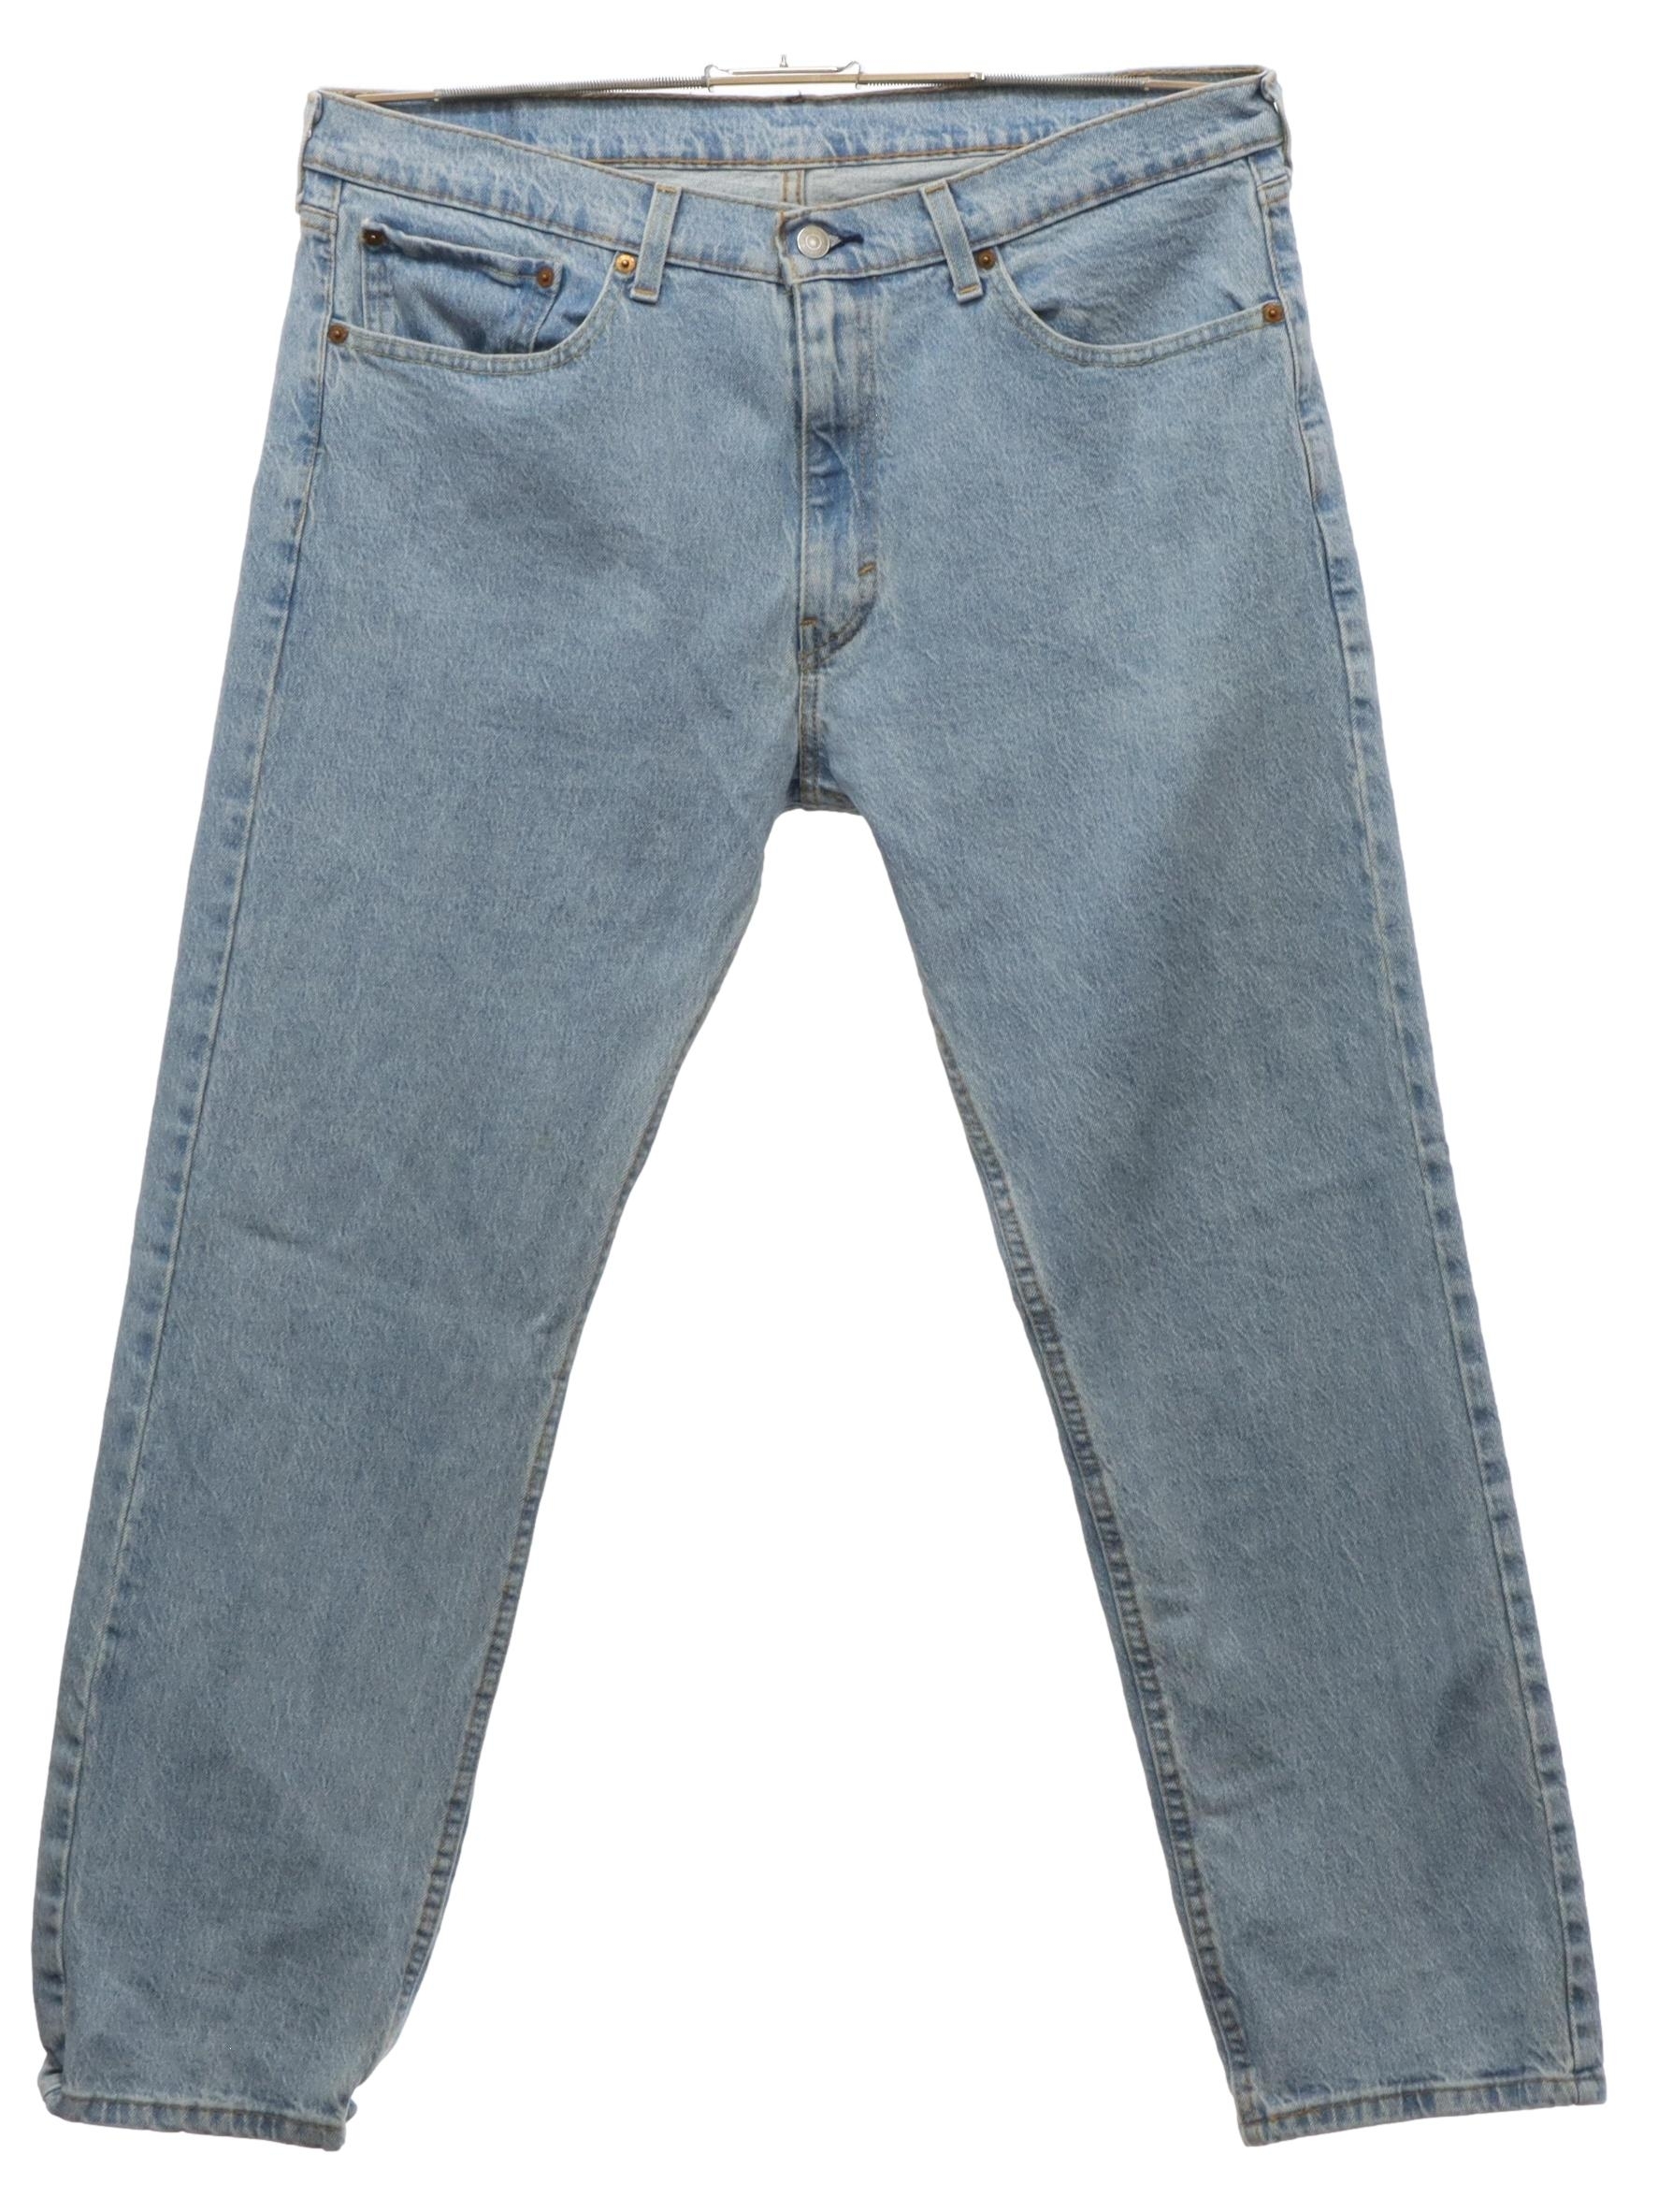 Buy Levi's Men's 502 Taper Fit Jeans Online India | Ubuy